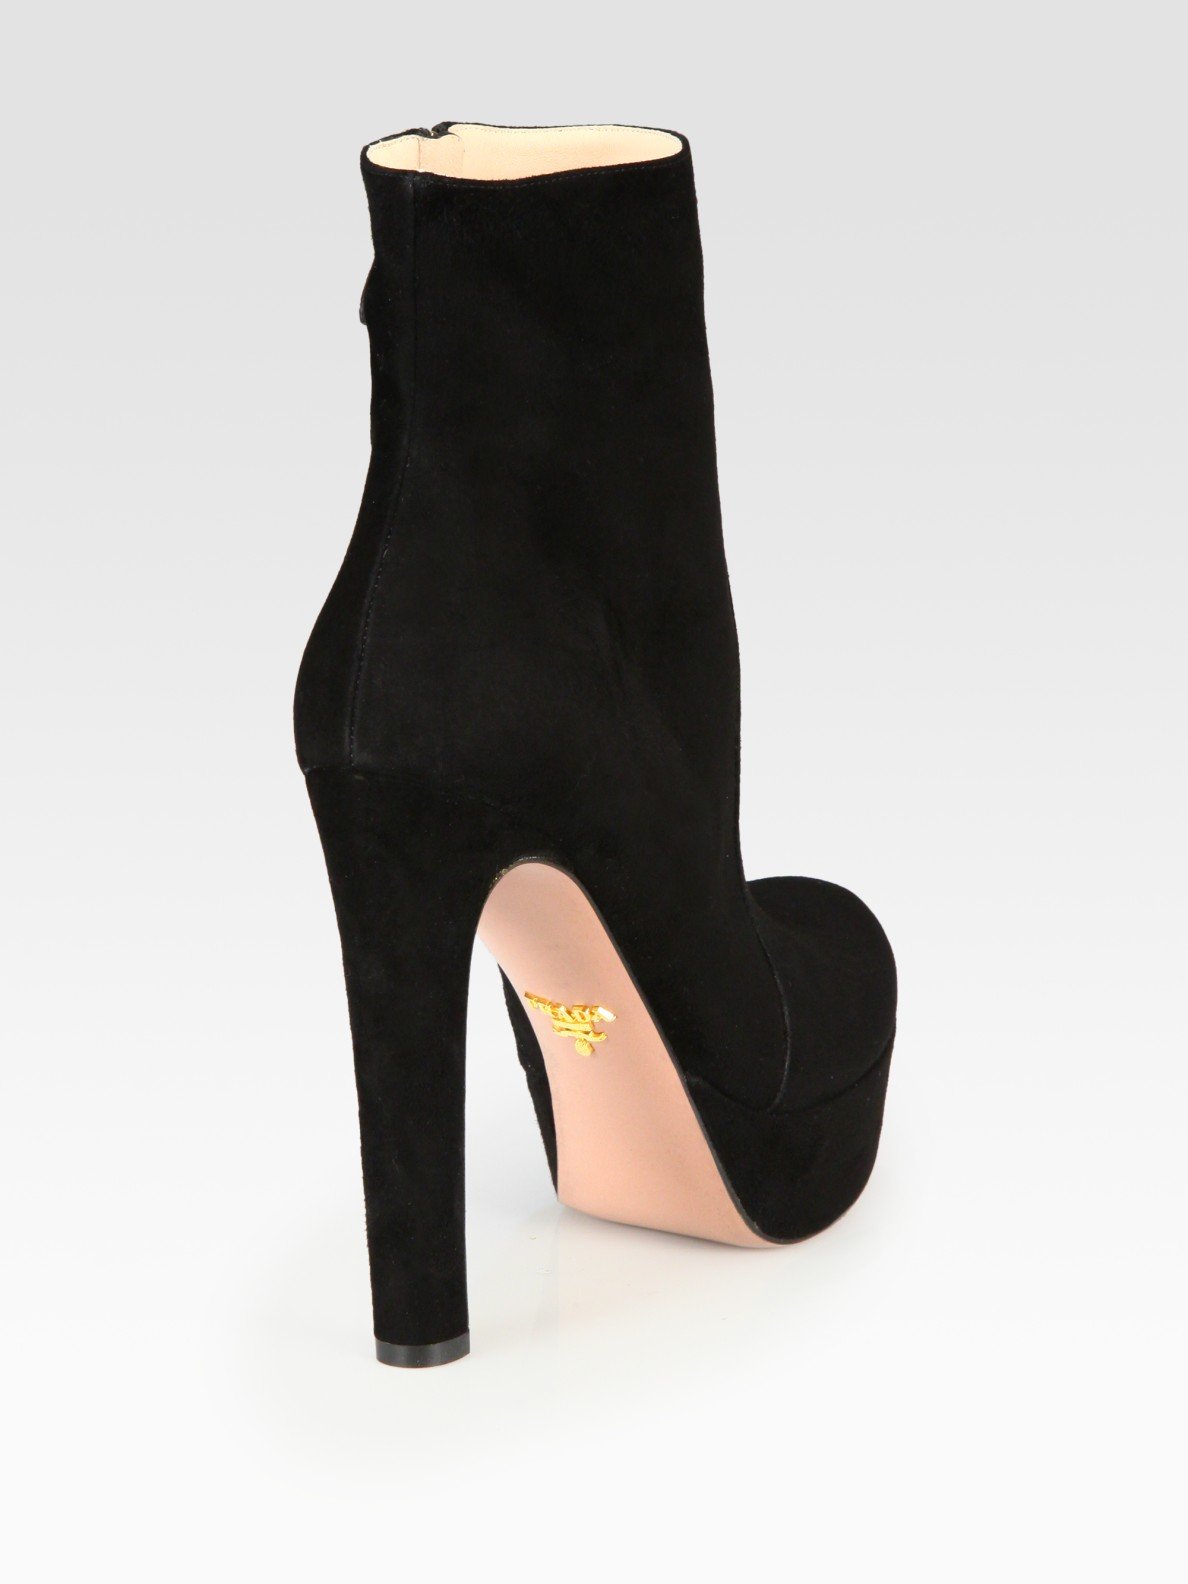 Prada Suede Platform Ankle Boots in Black | Lyst